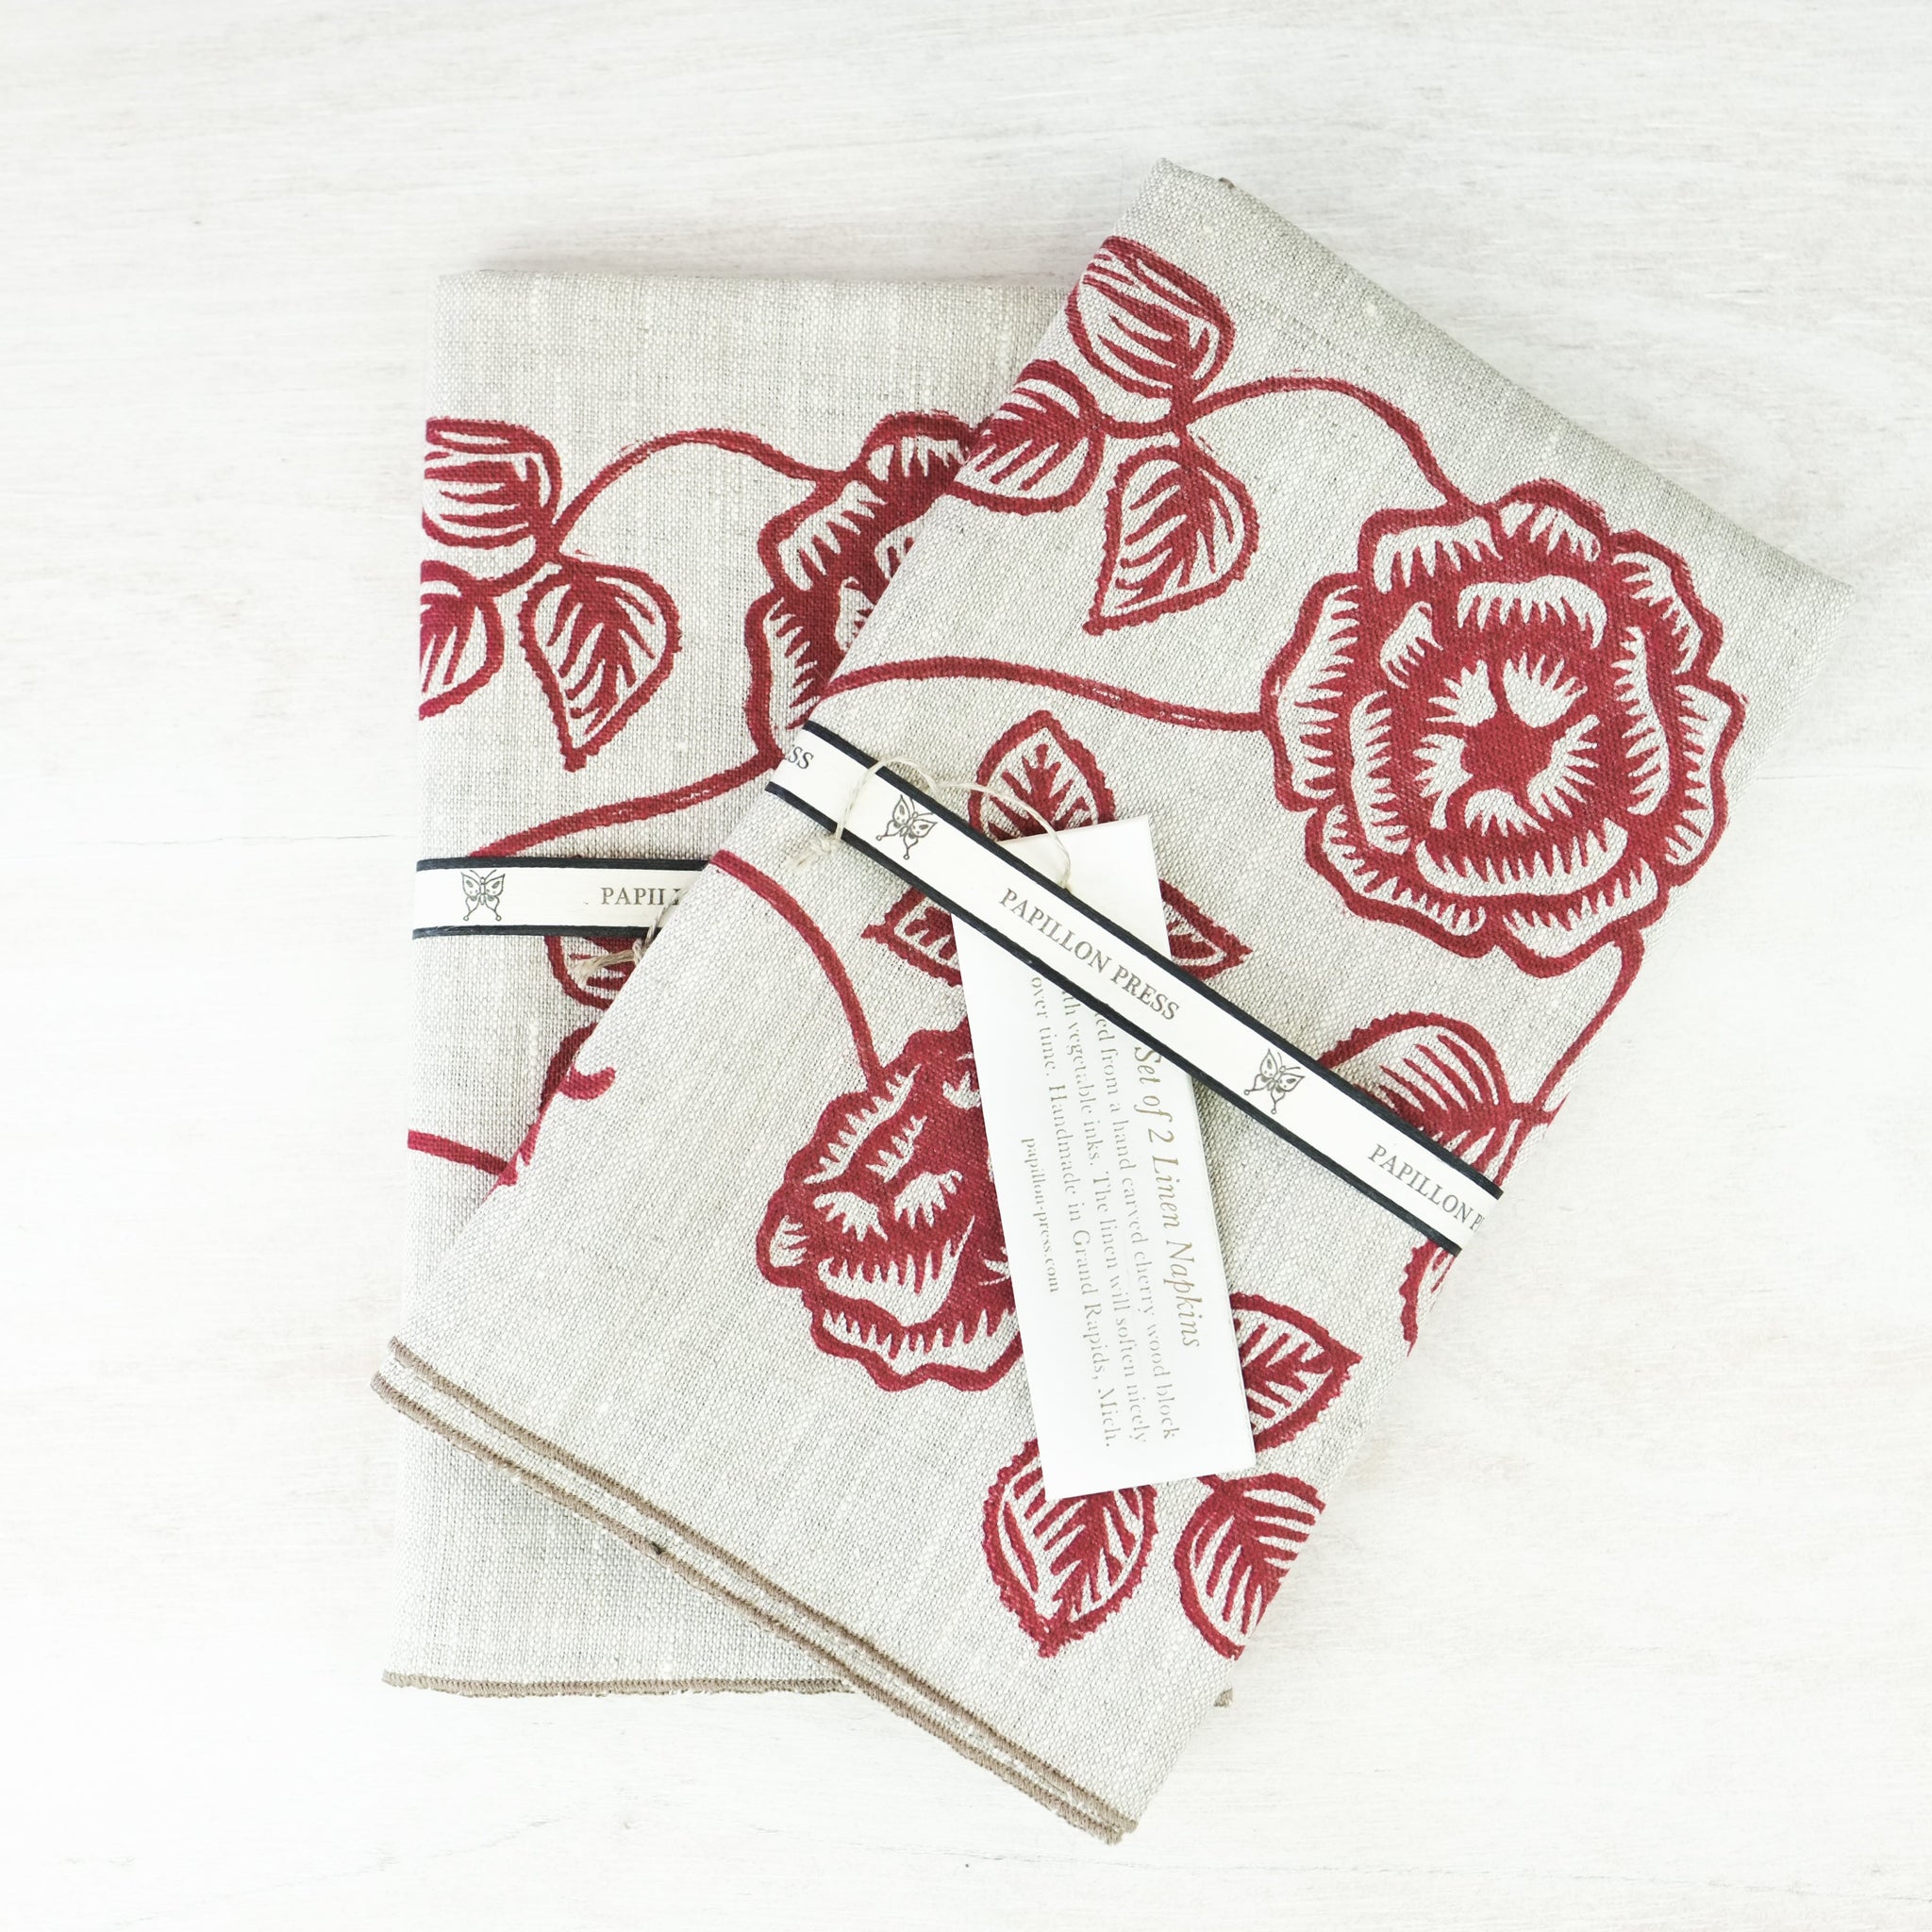 Personalized Napkins -Monogrammed dinner napkins set of 12